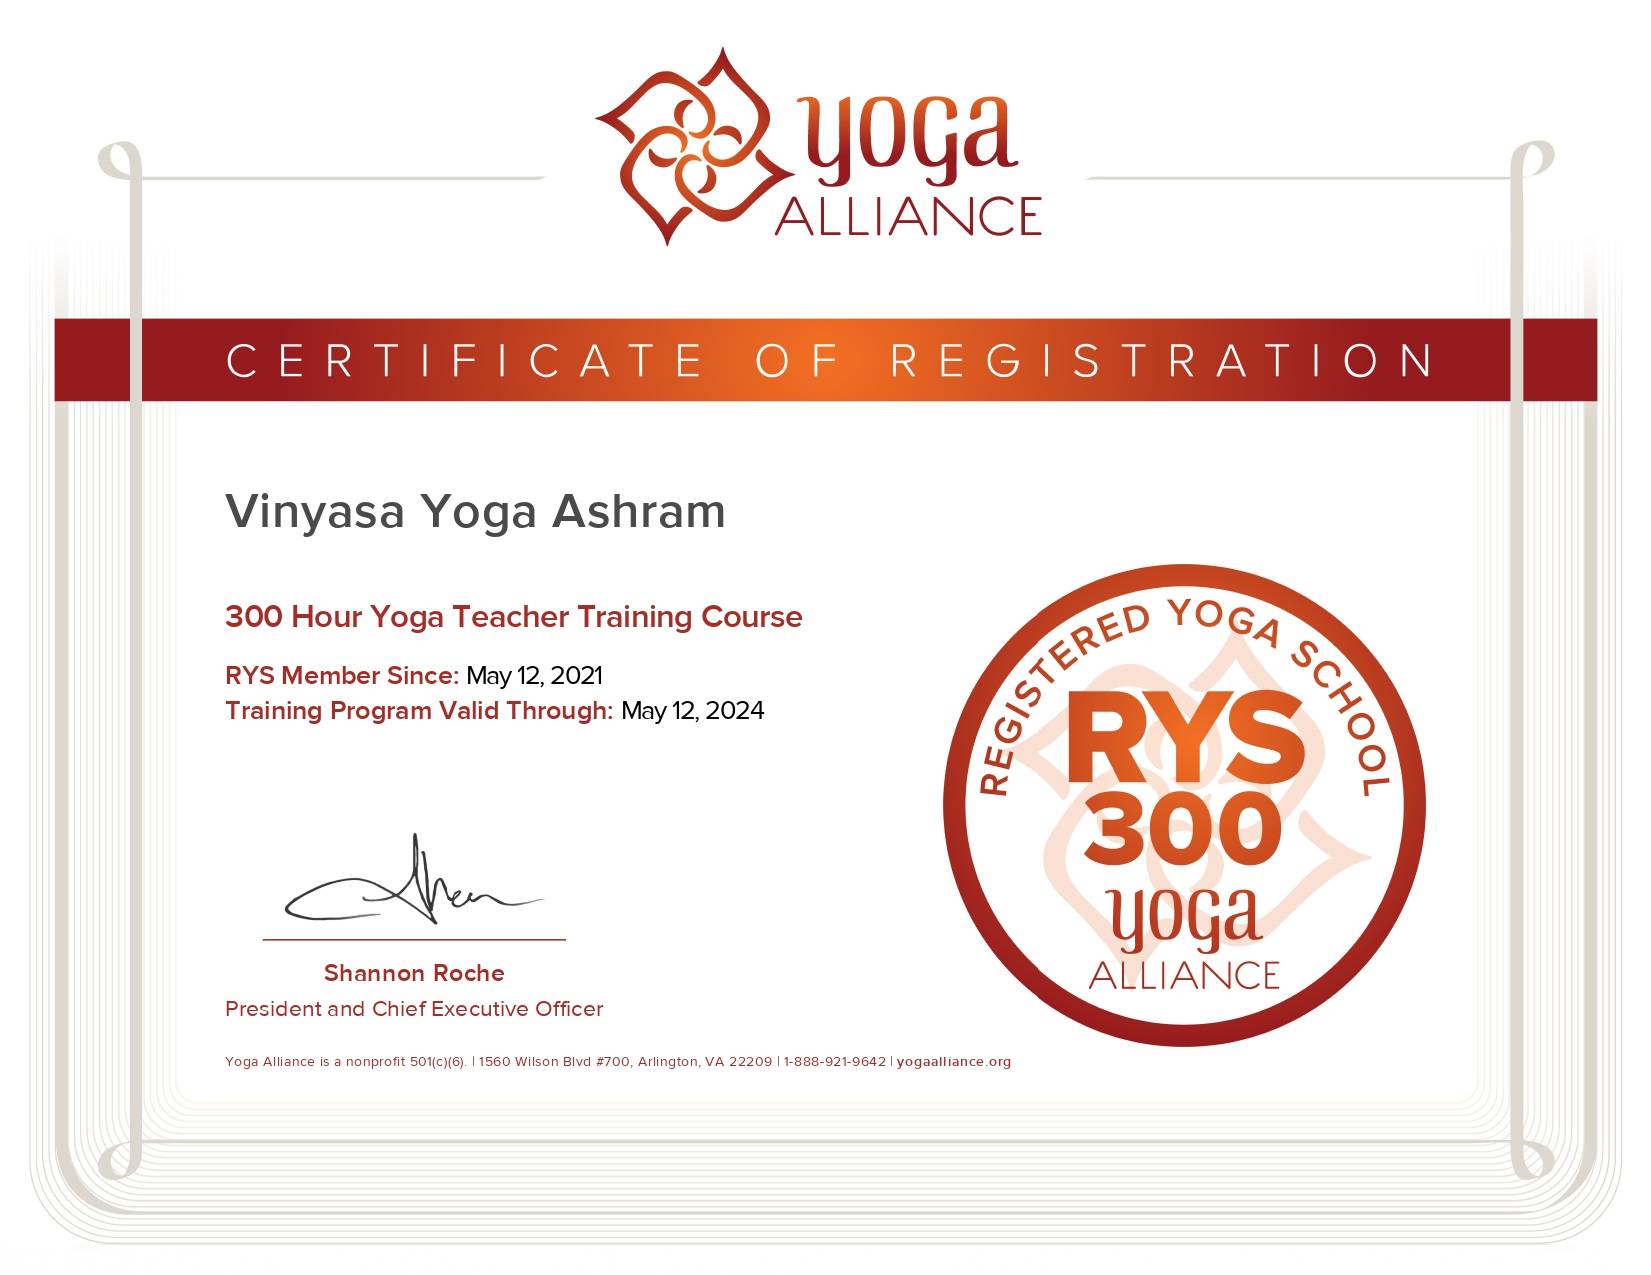 yoga teacher training one month, International School of Yoga